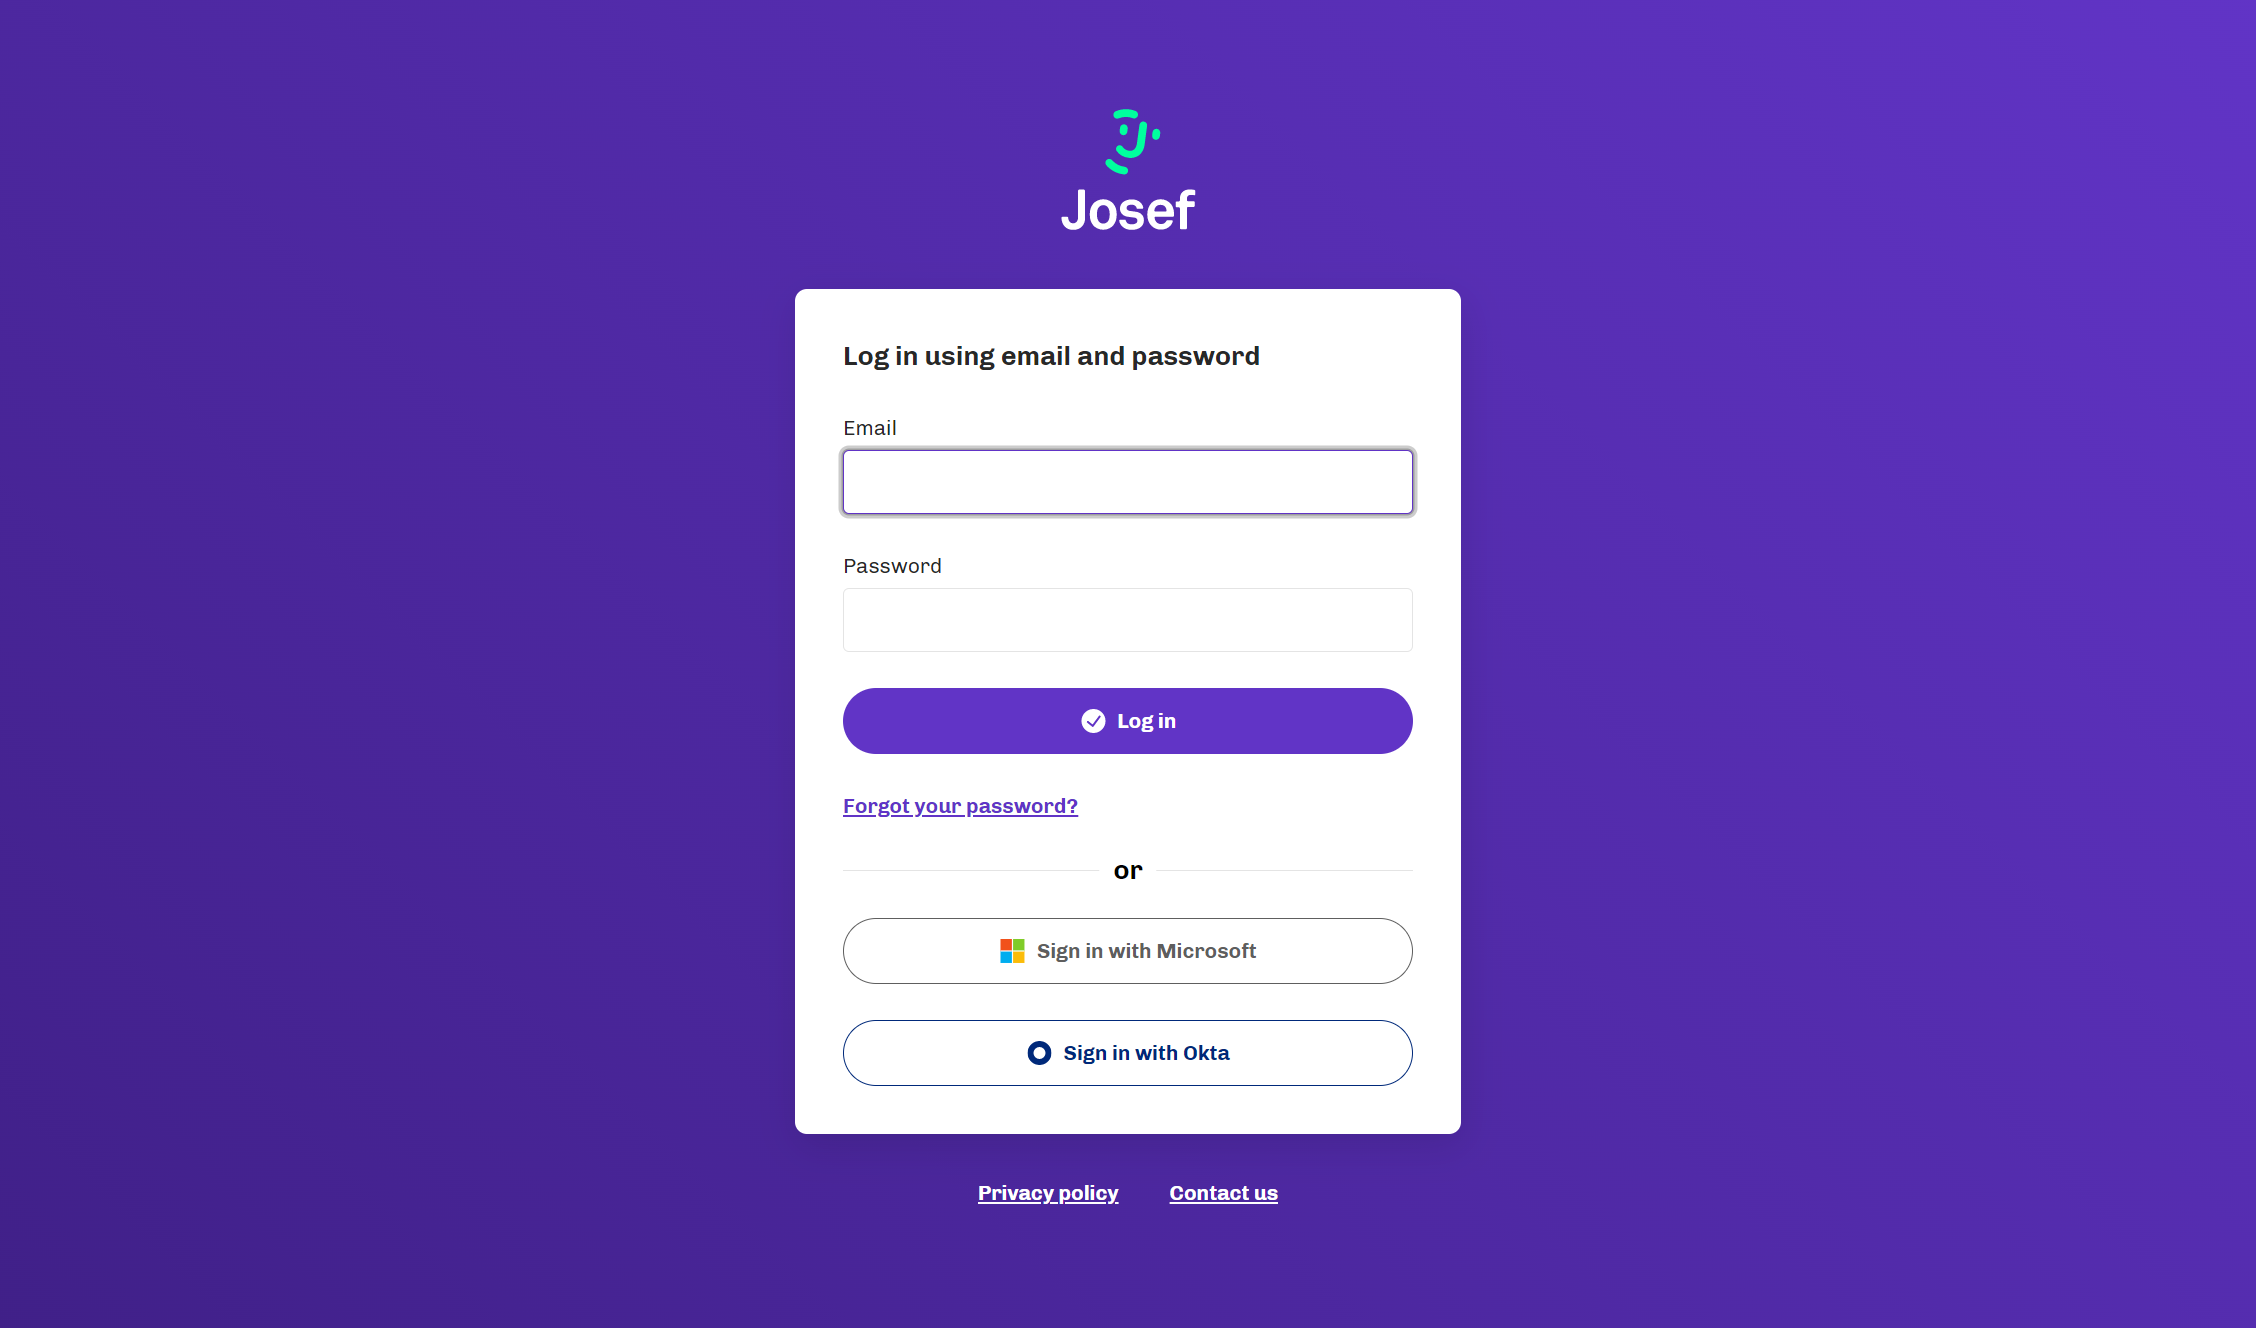 Josef_dashboard_portal.png